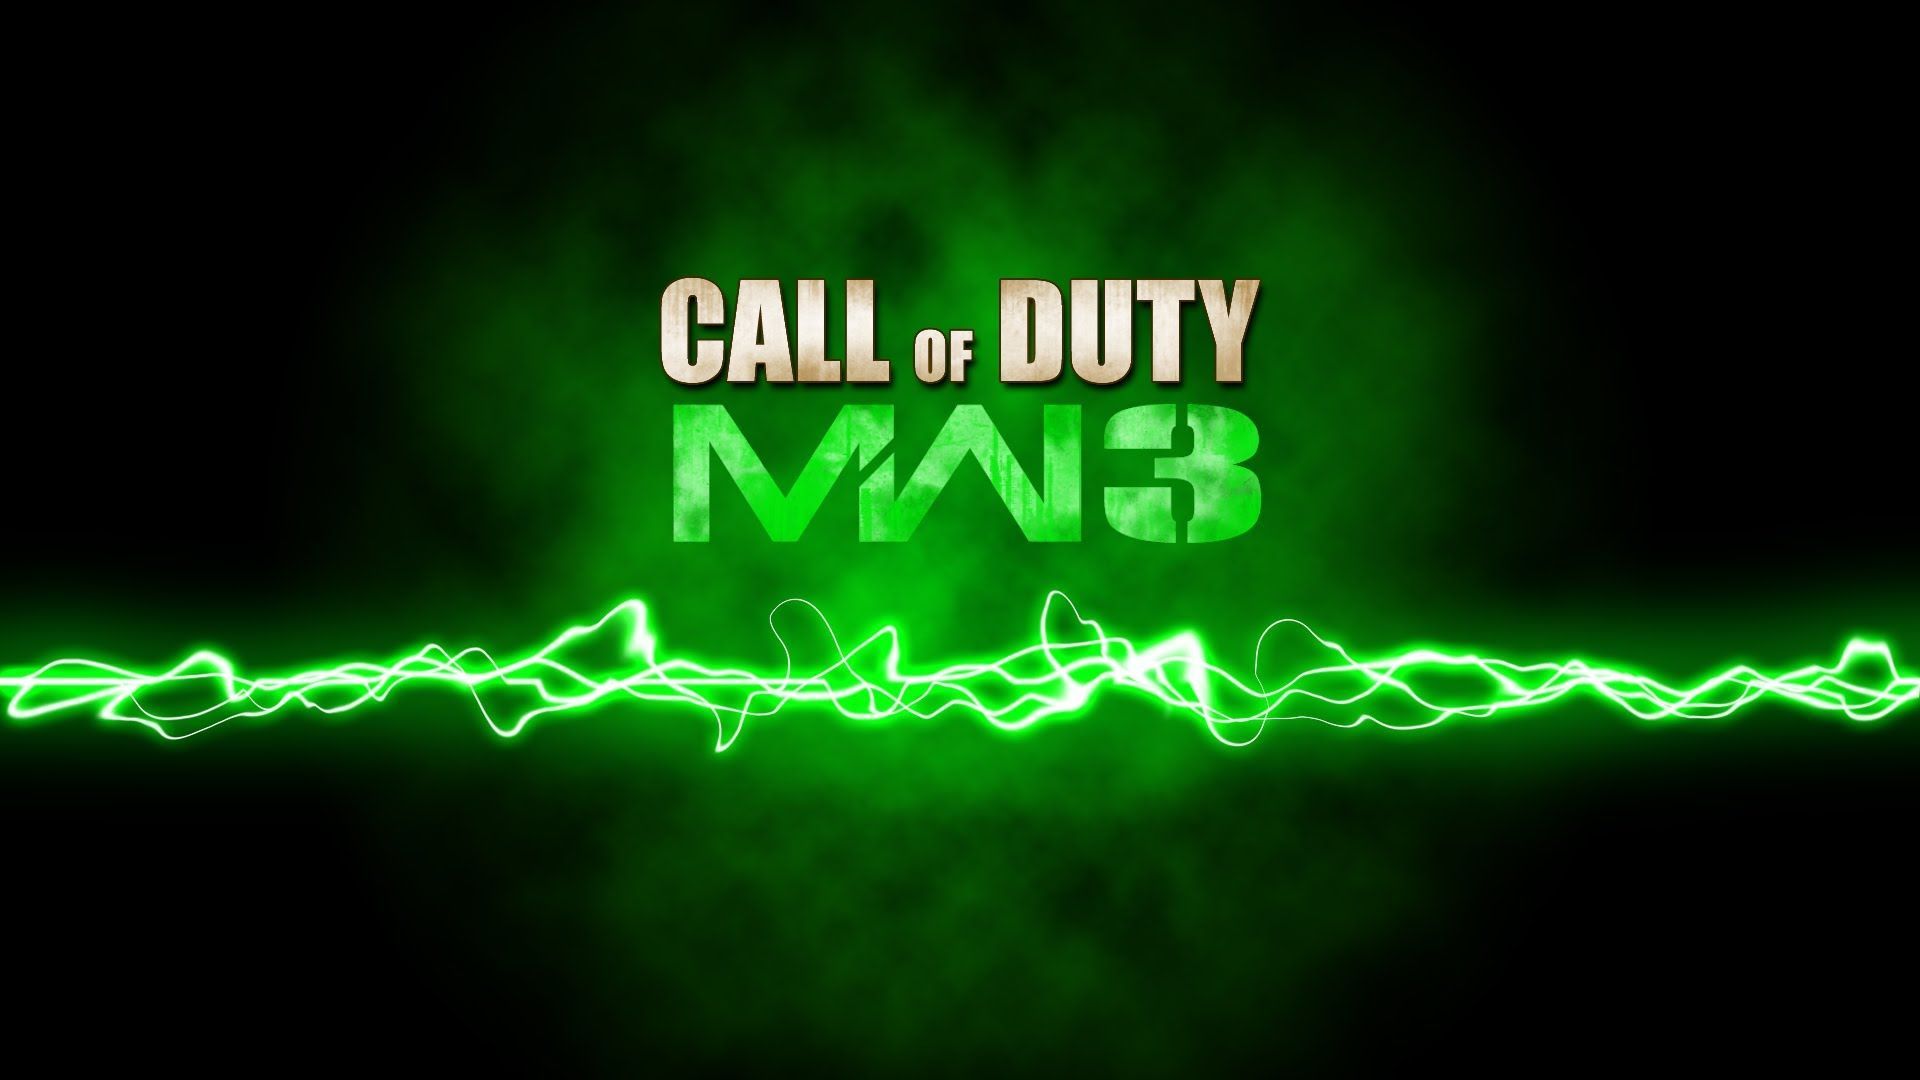 How to create Call of Duty Modern Warfare 3 wallpaper in Adobe ...